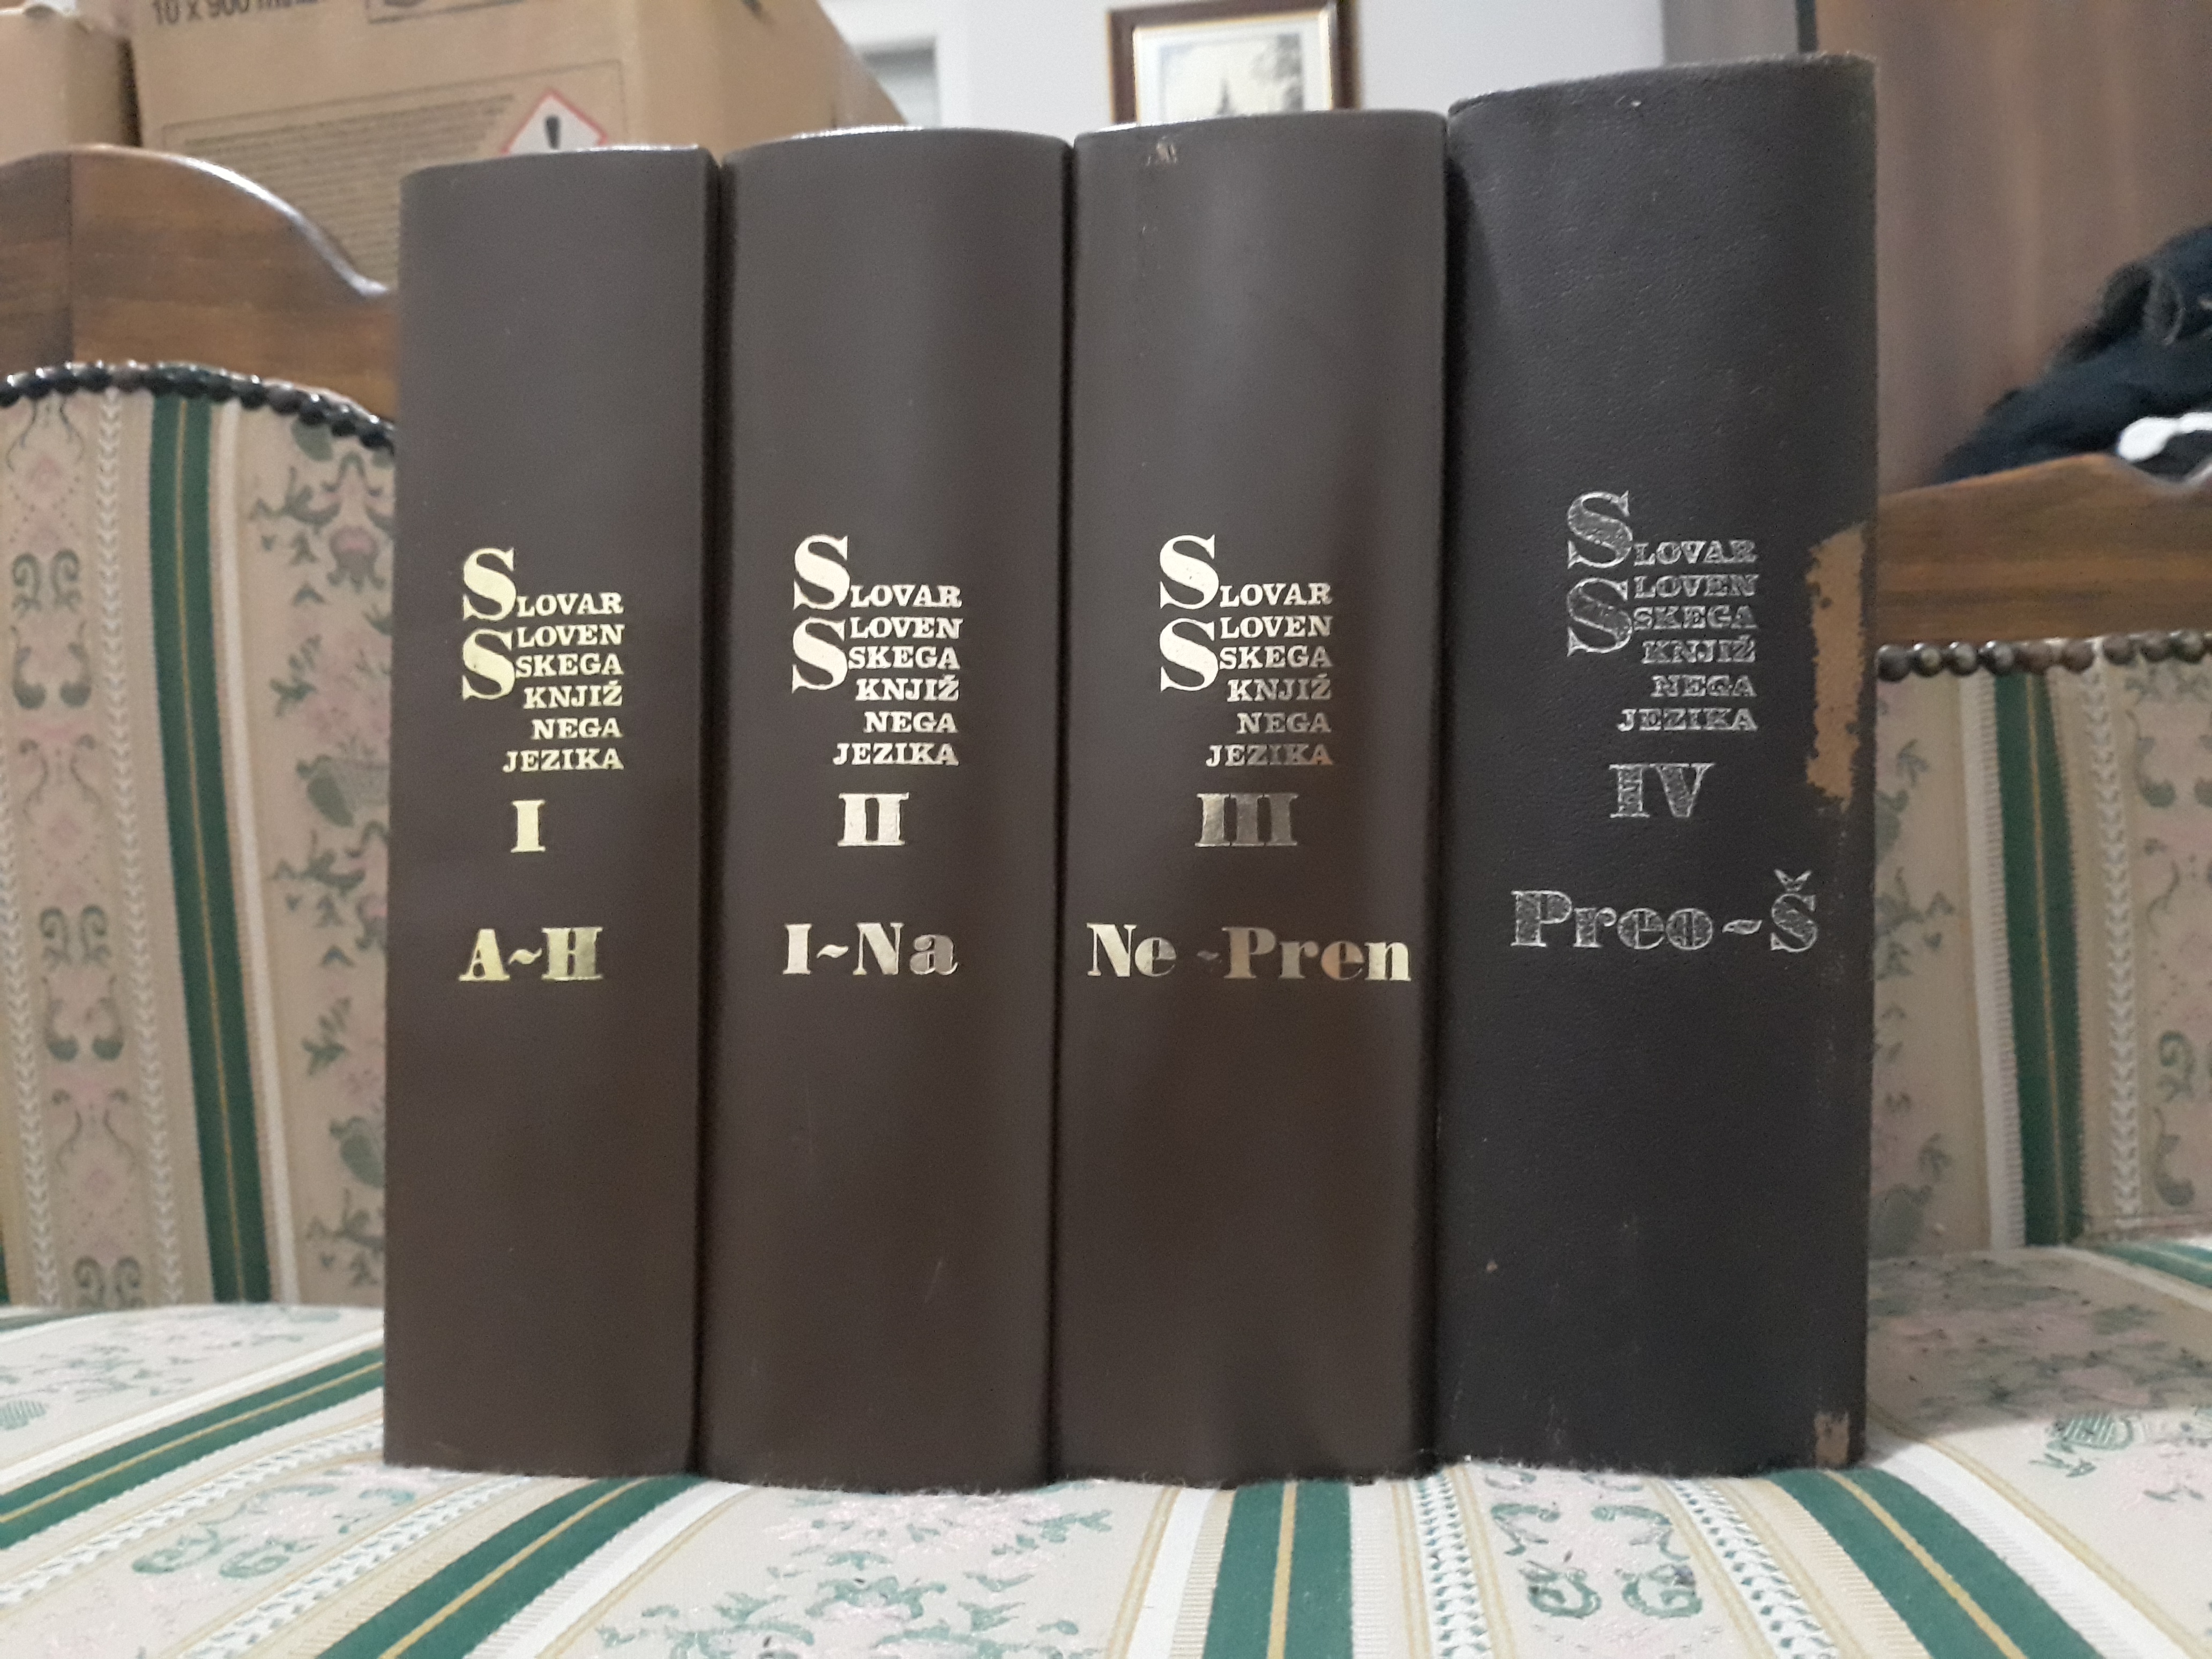 Slovar Slovenskega knjižnega jezika komplet I II III IV